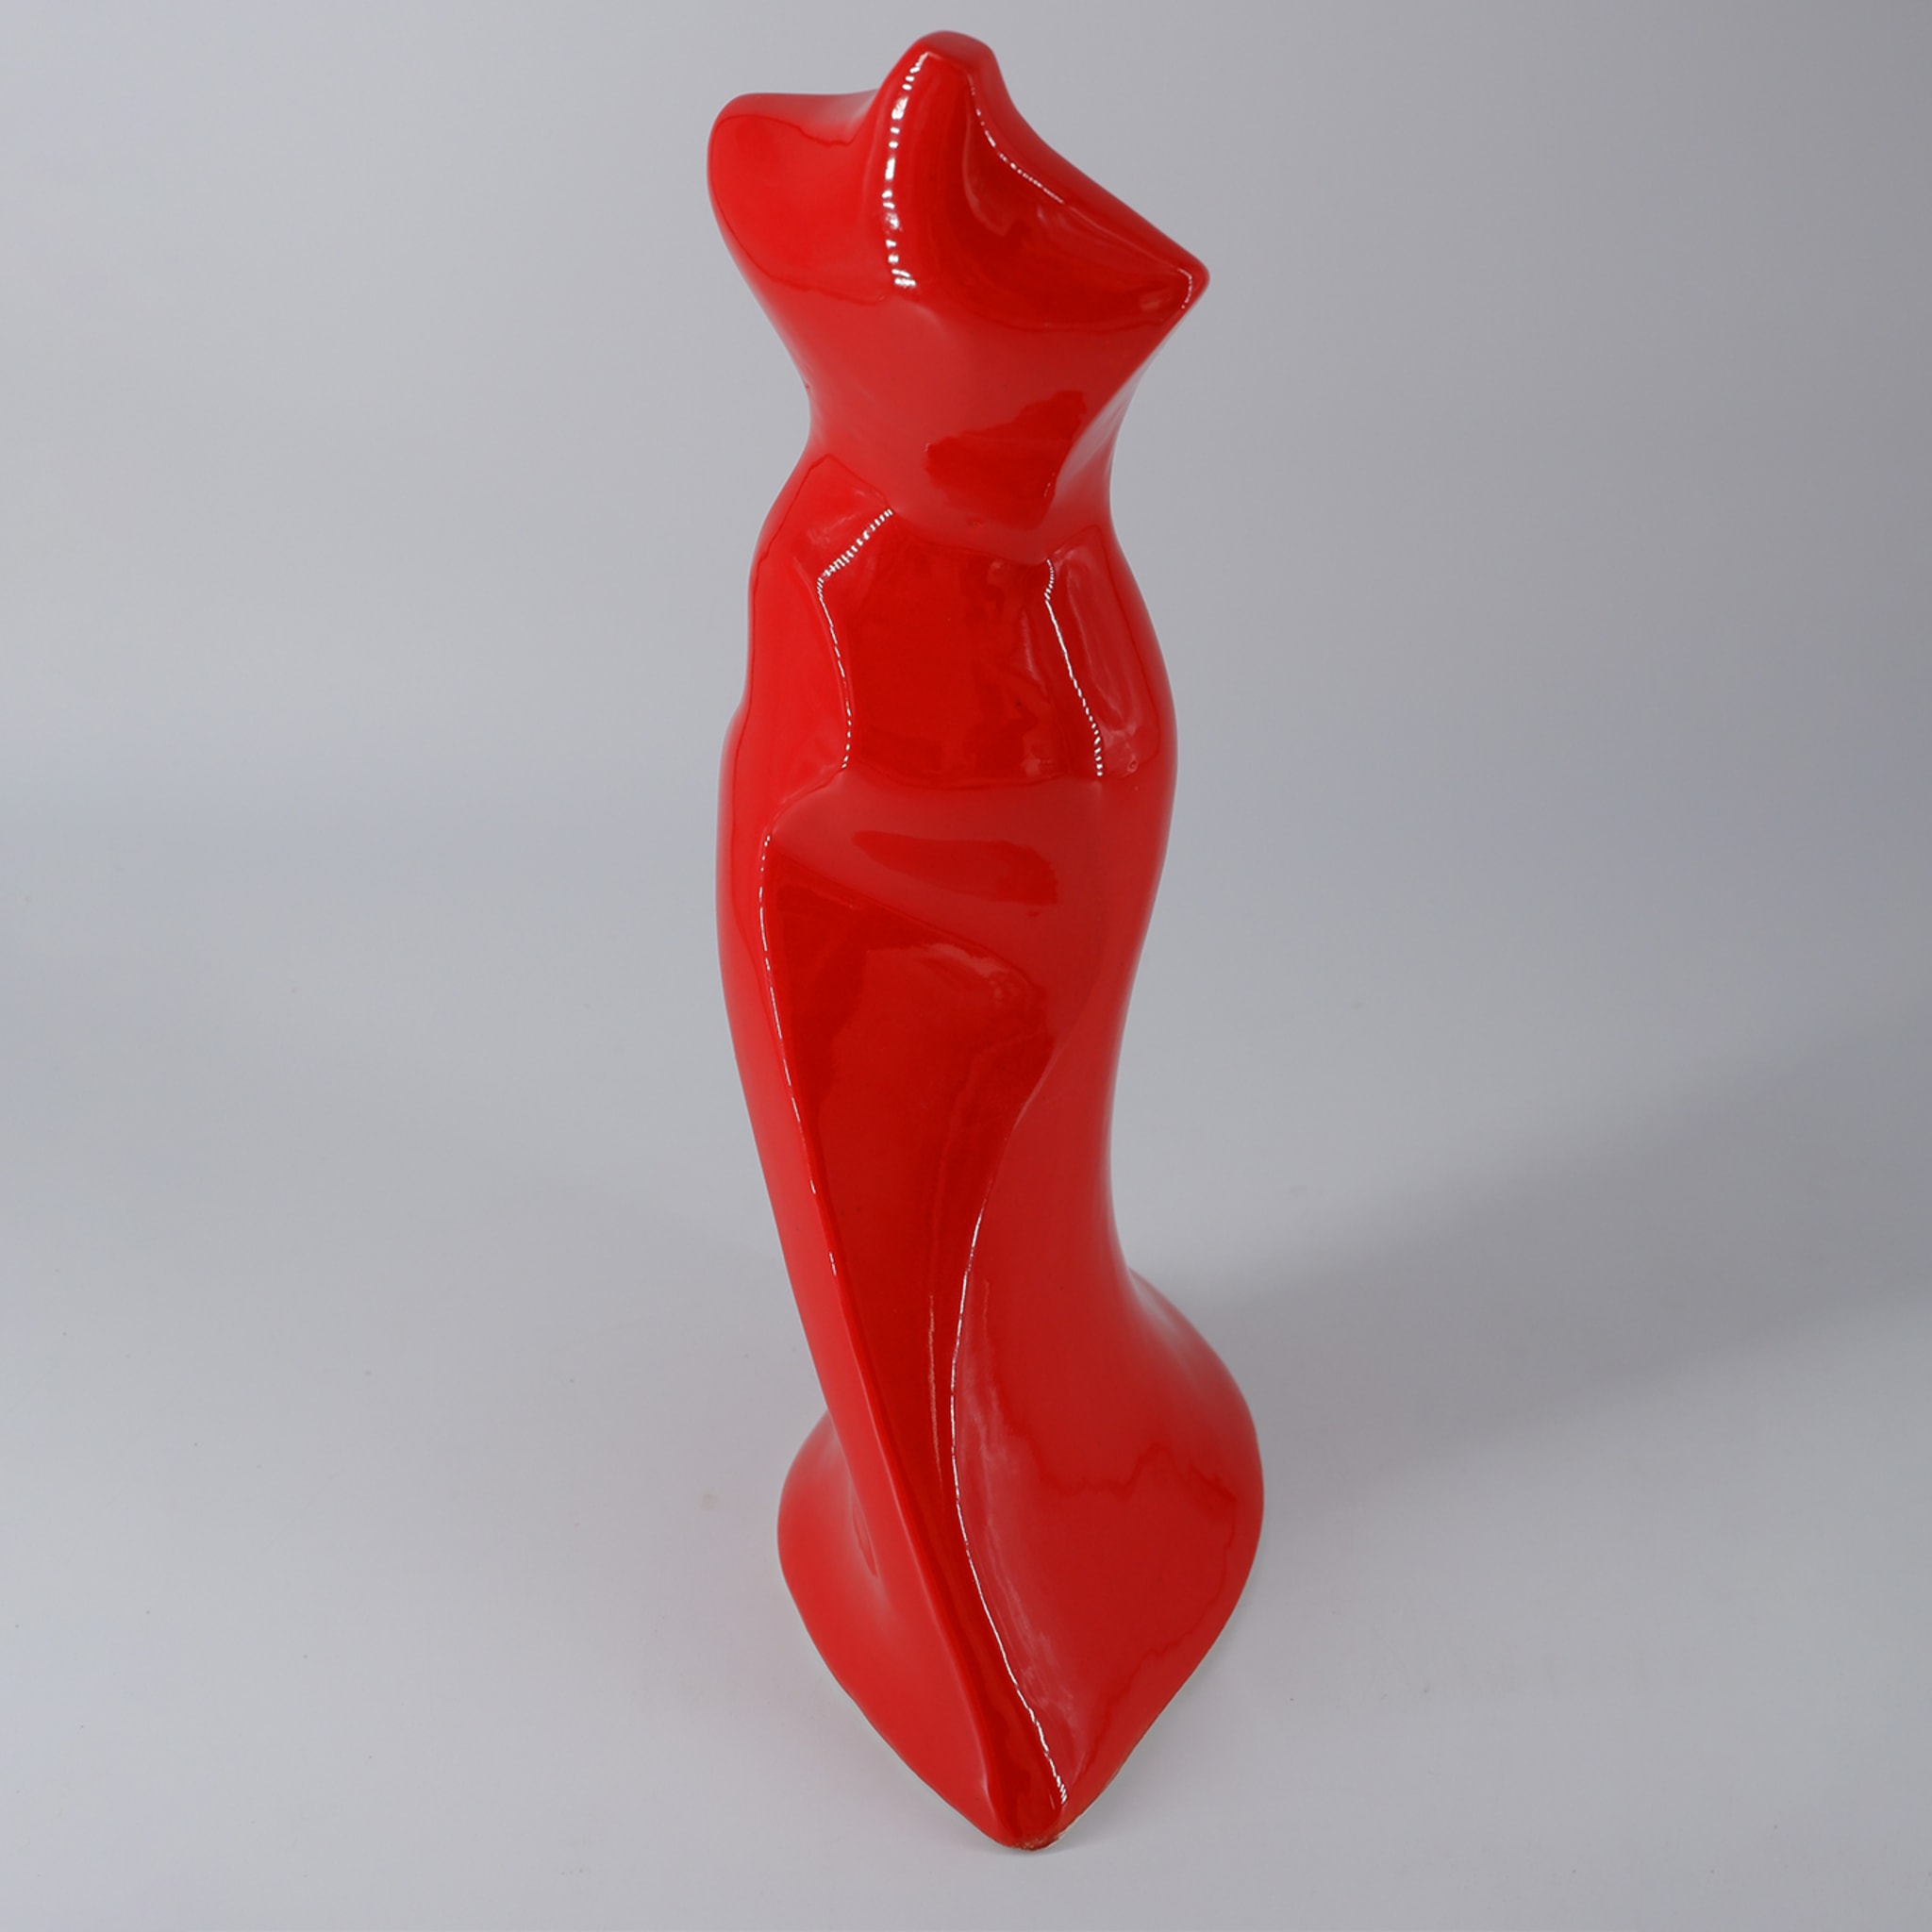 Greta Red Sculpture - Alternative view 4